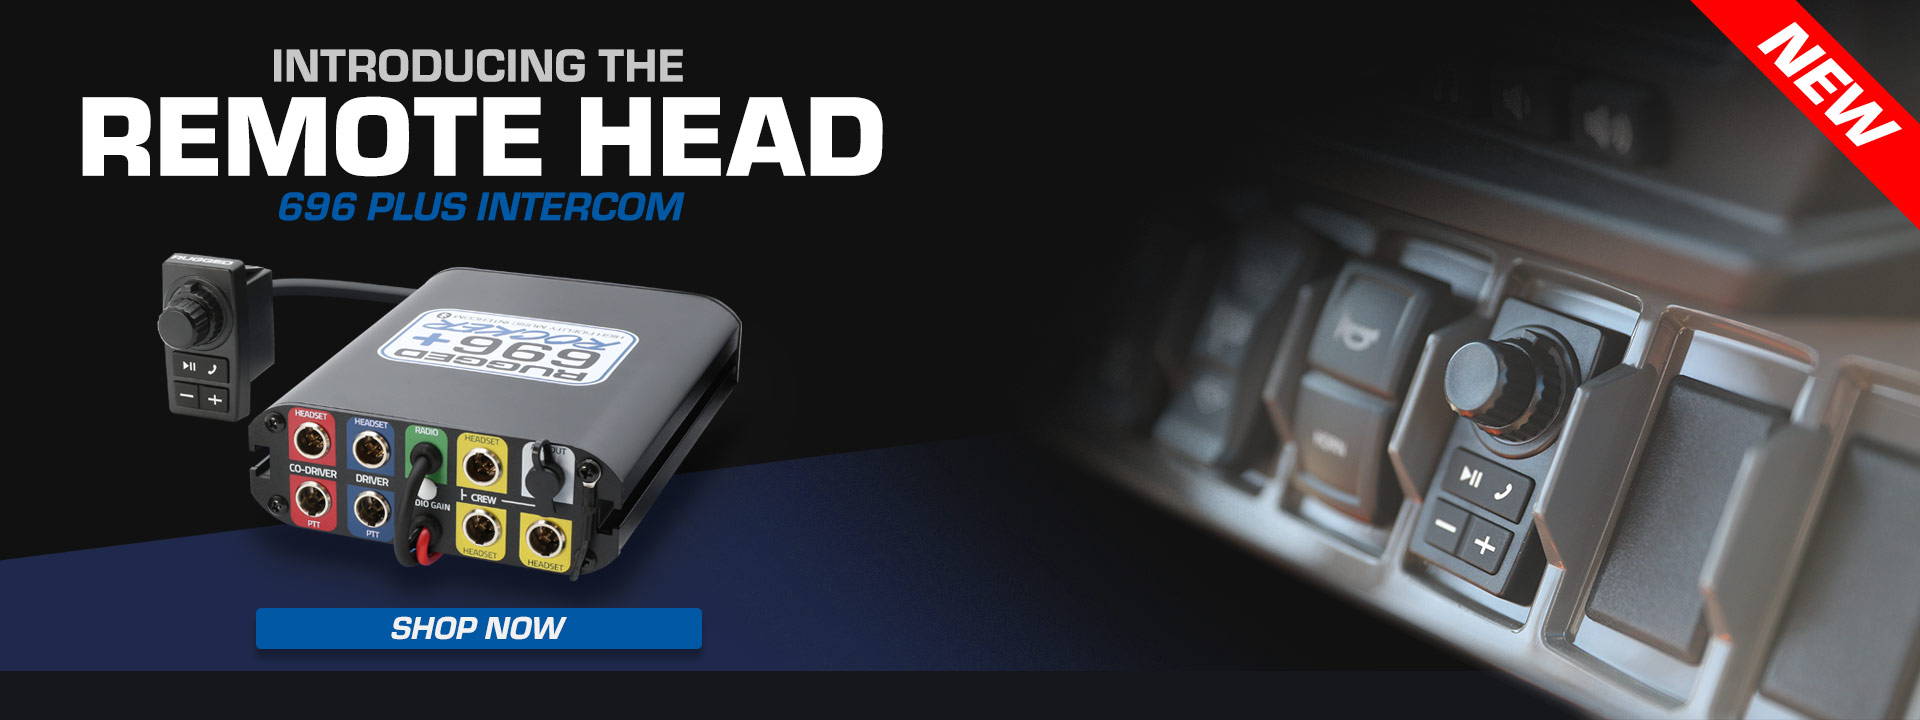 Introducing the 696 Plus Remote Head Intercom